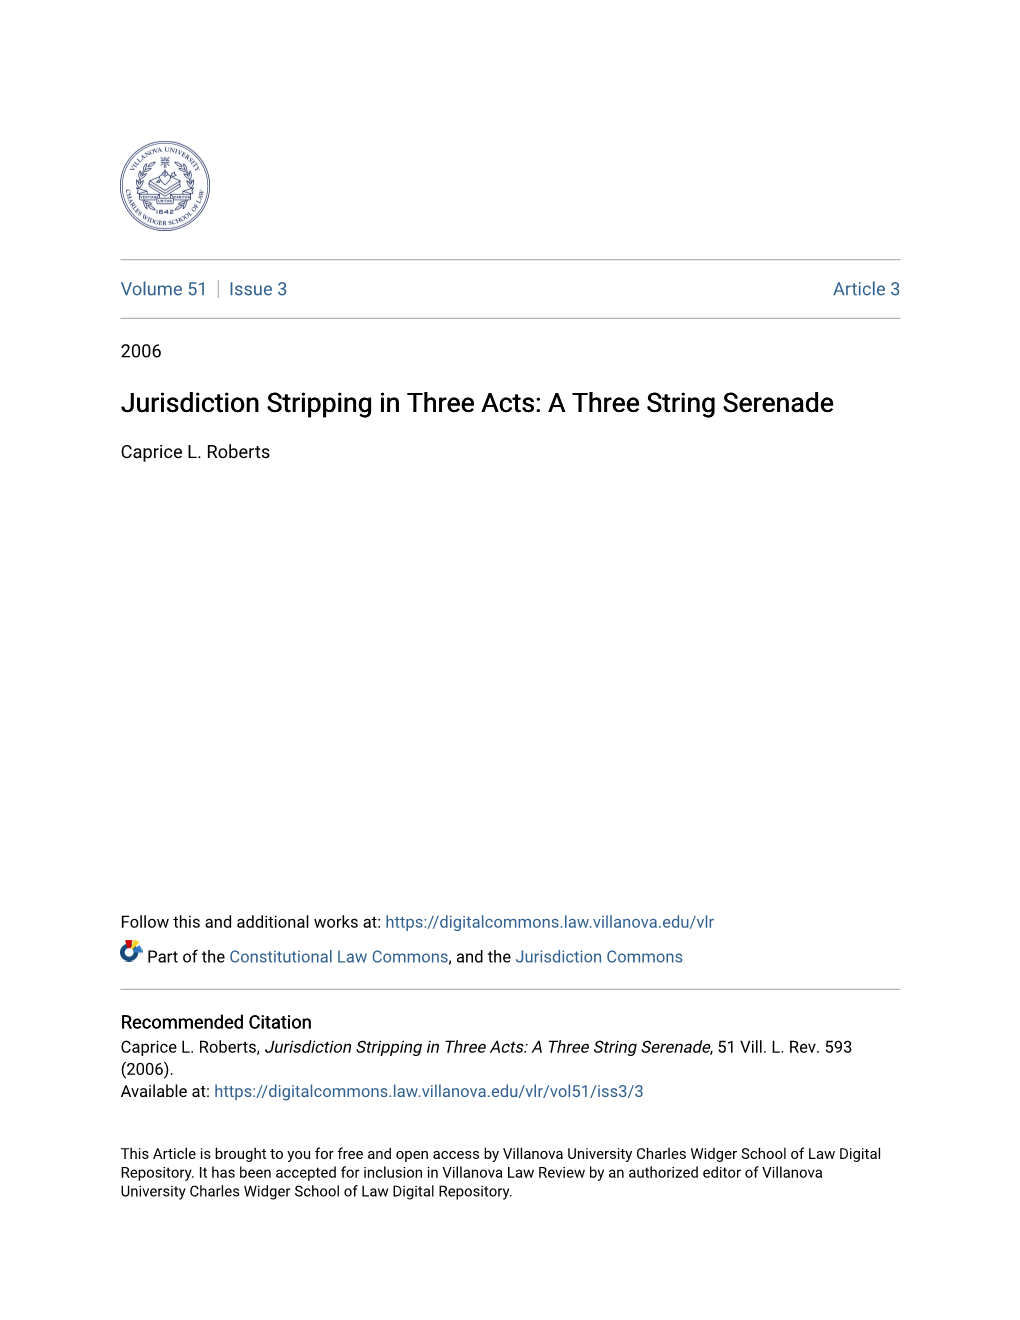 Jurisdiction Stripping in Three Acts: a Three String Serenade